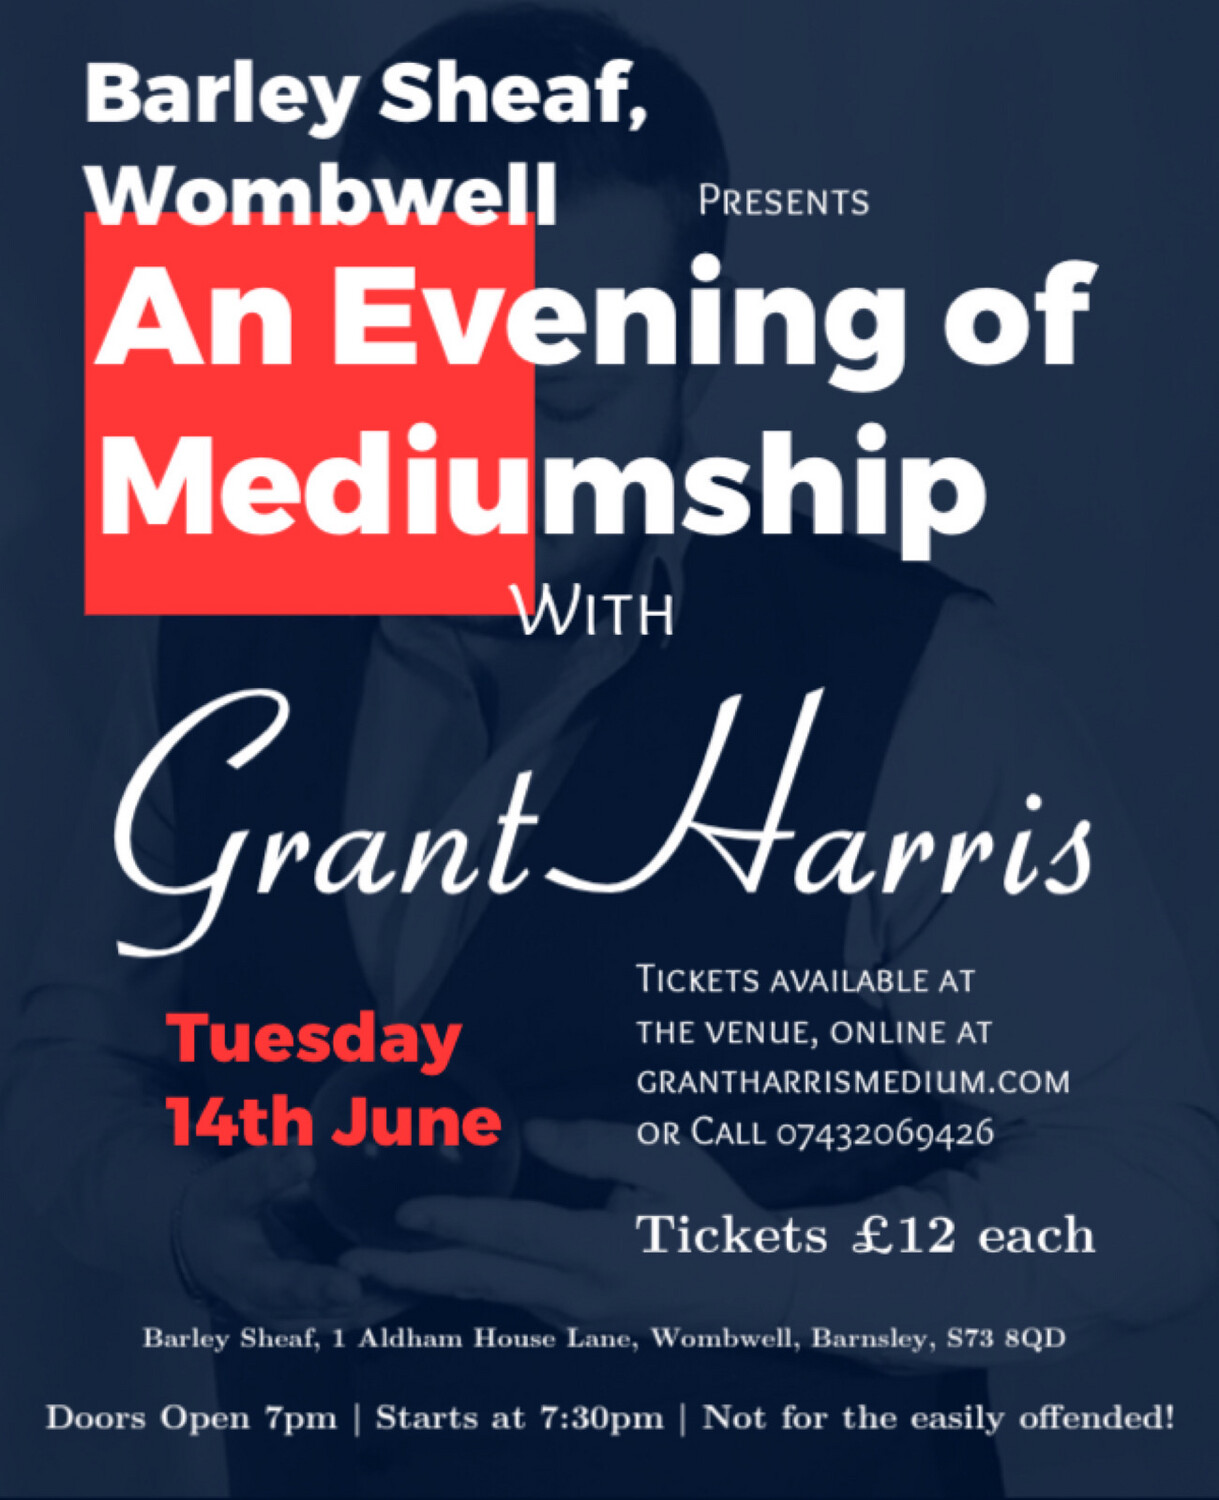 Evening of Mediumship, Barley Sheaf, Wombwell, Tue 14th June 2022